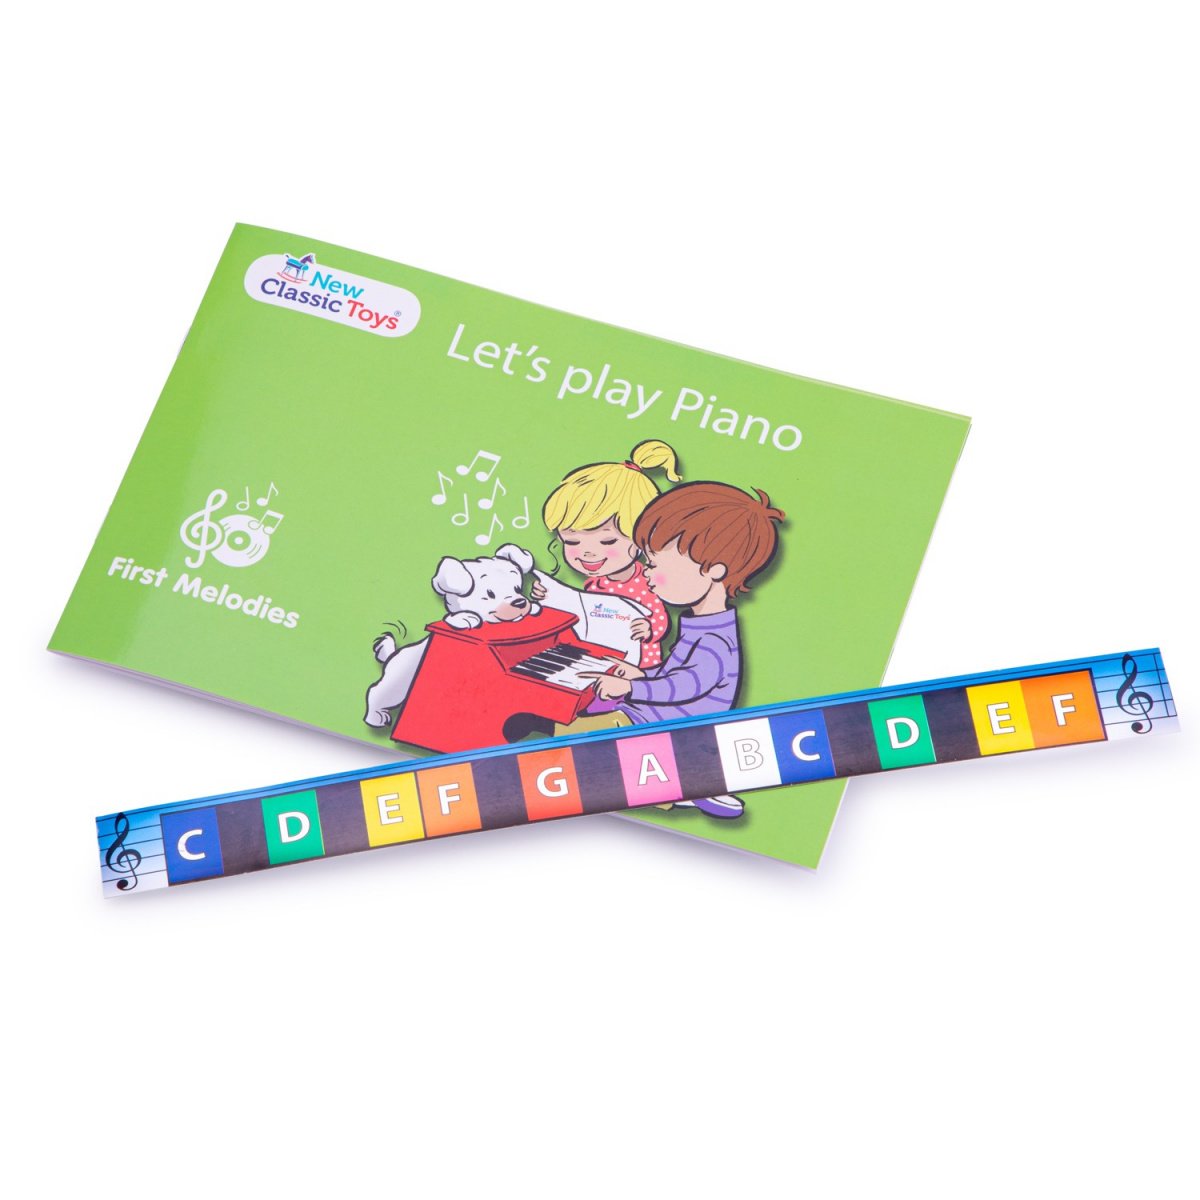 Детское пианино New Classic Toys розовое (10158) - фото 4